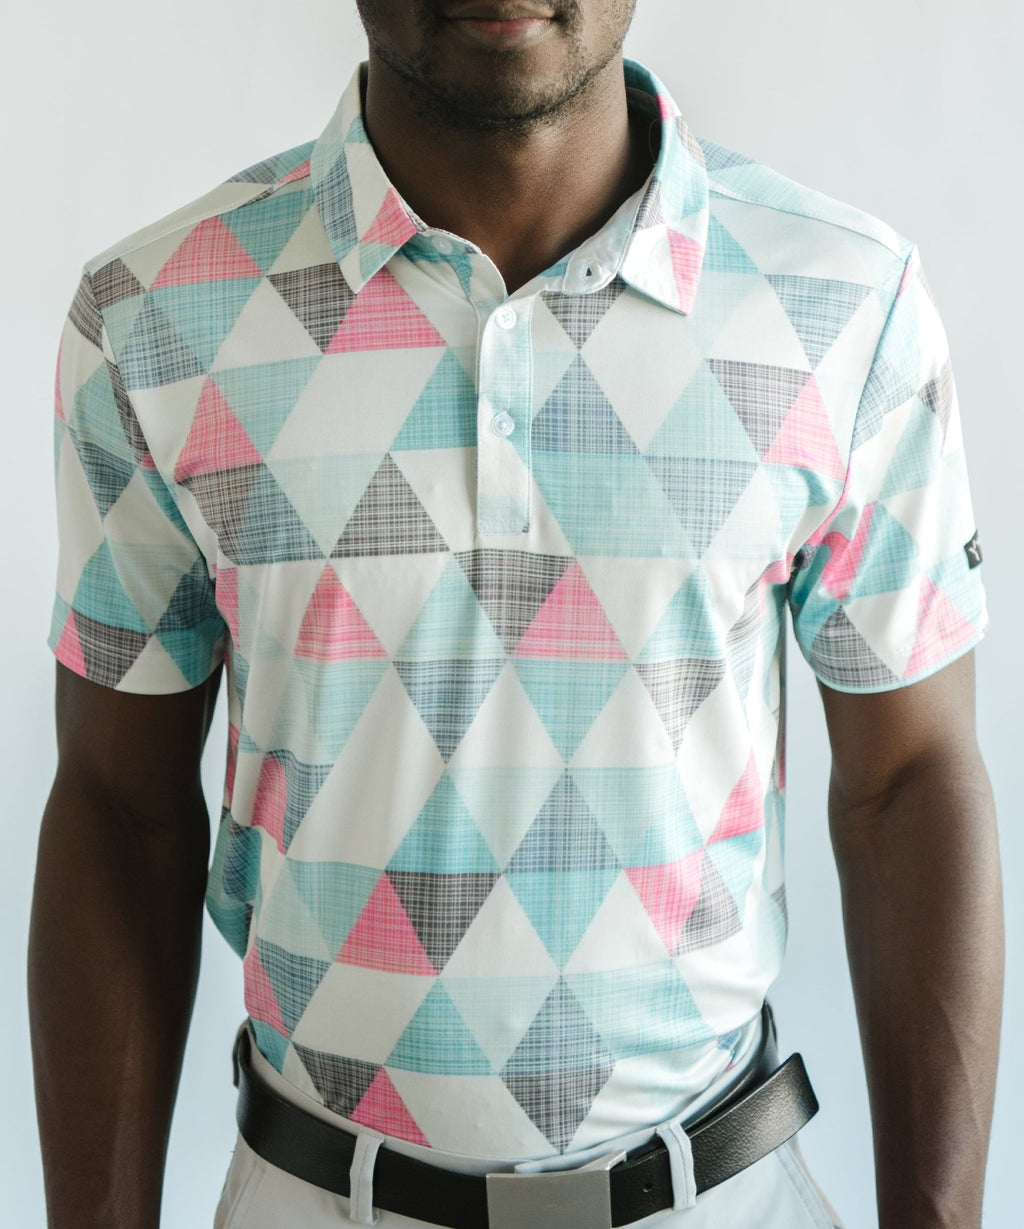 YATTA GOLF Standout Performance Golf Polo Shirts – Men's – Birdie